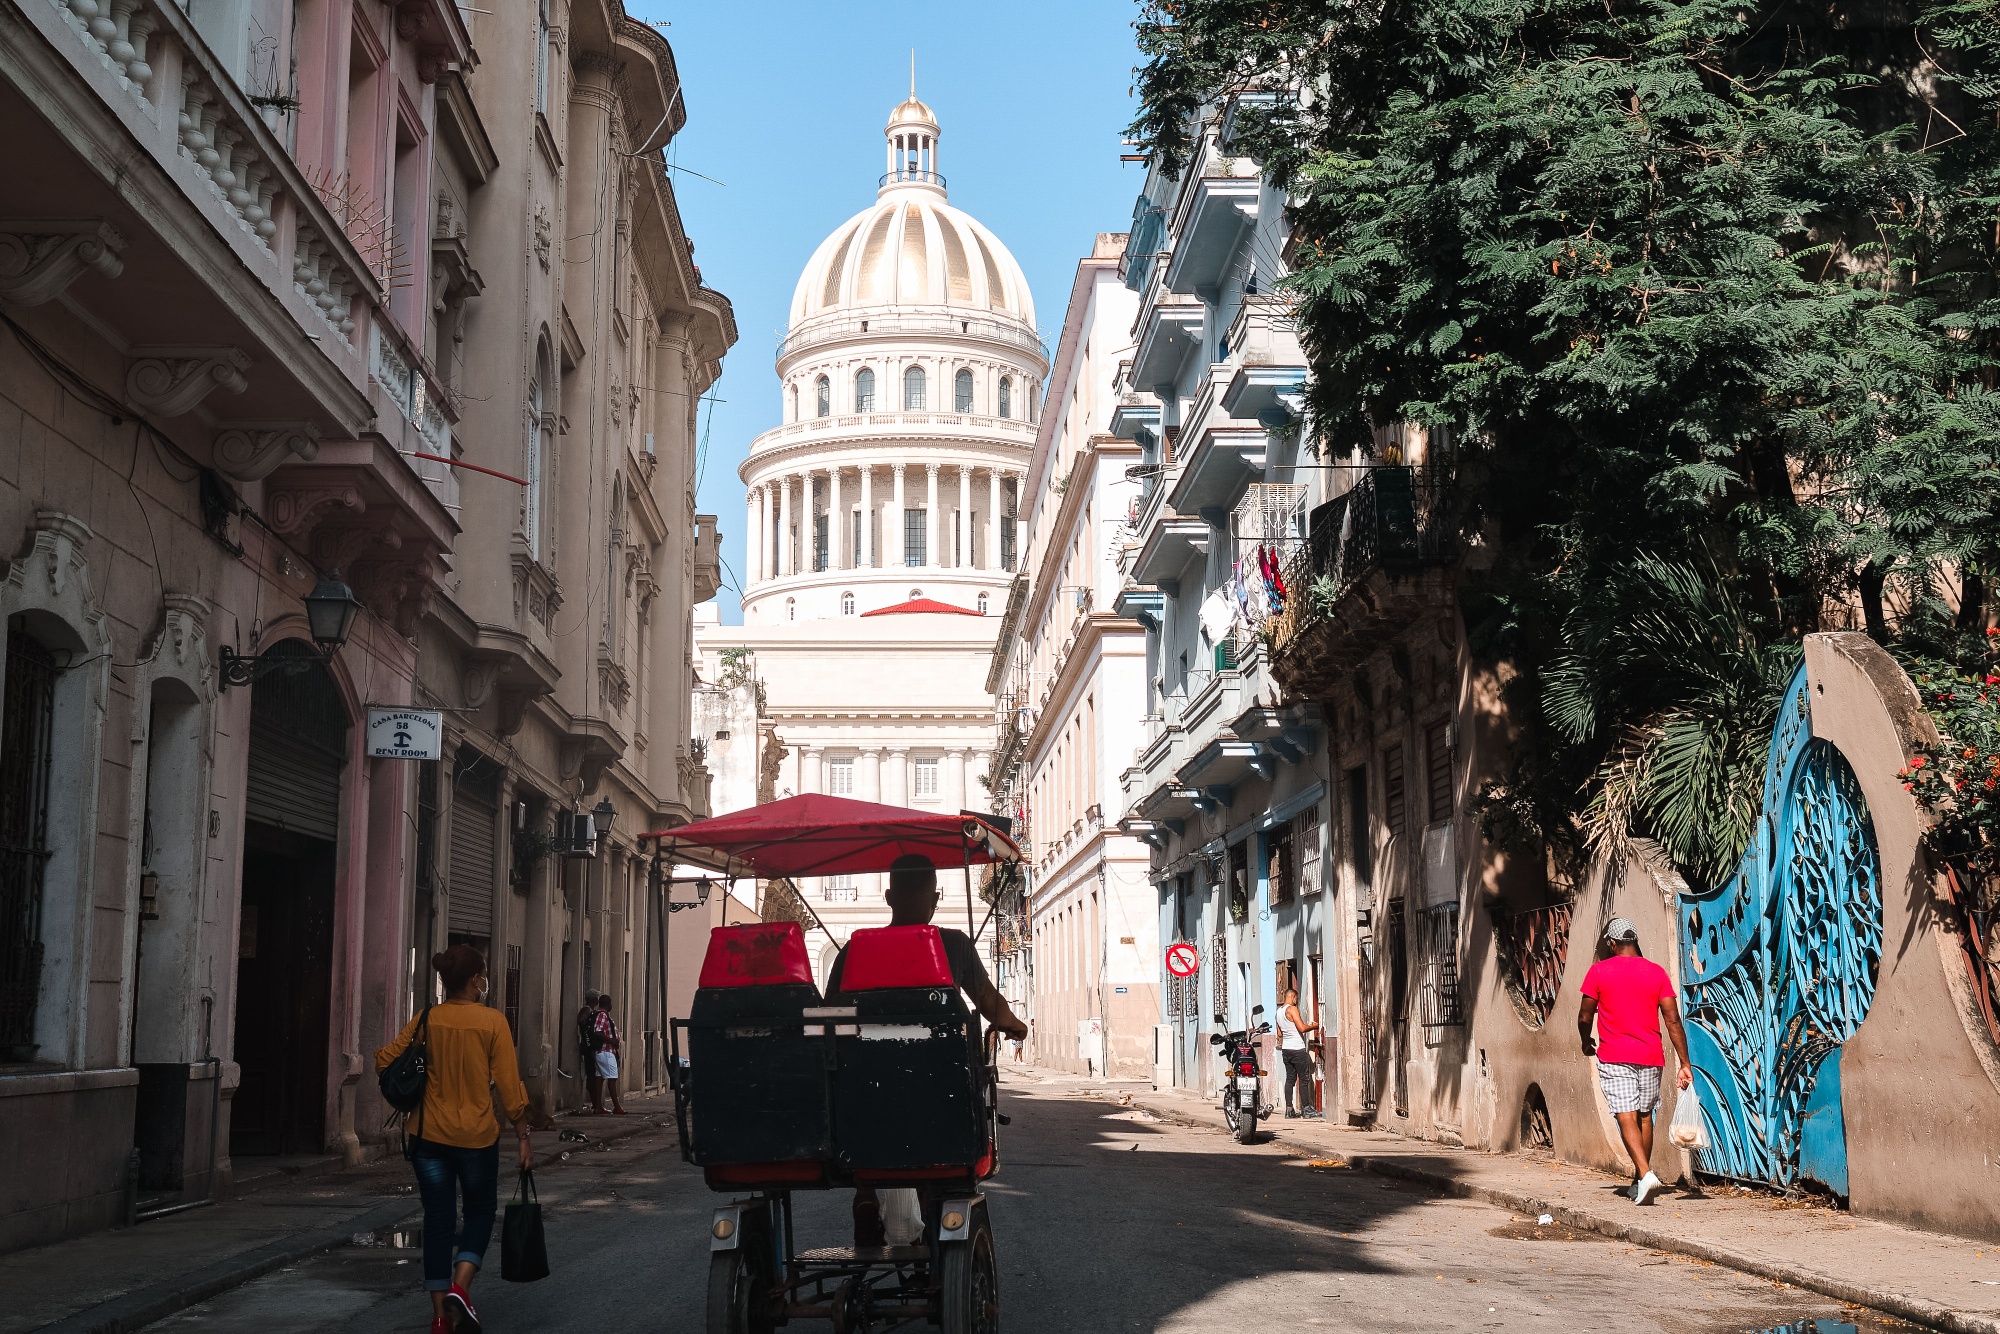 A pedicab travels towards the National Capitol building in Havana, Cuba.